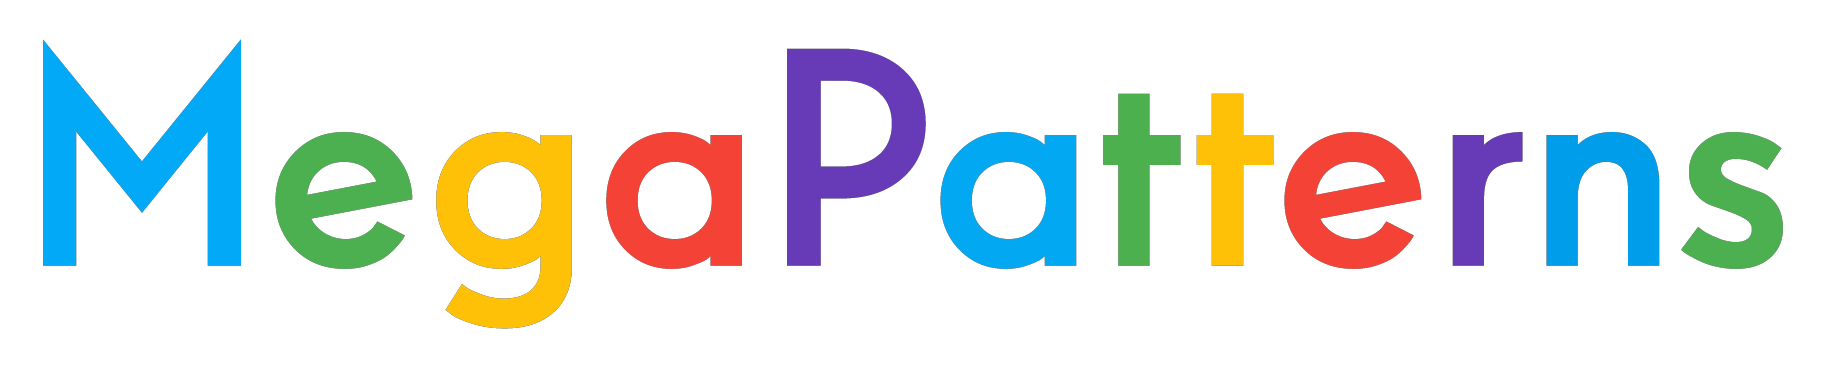 MegaPatterns logo